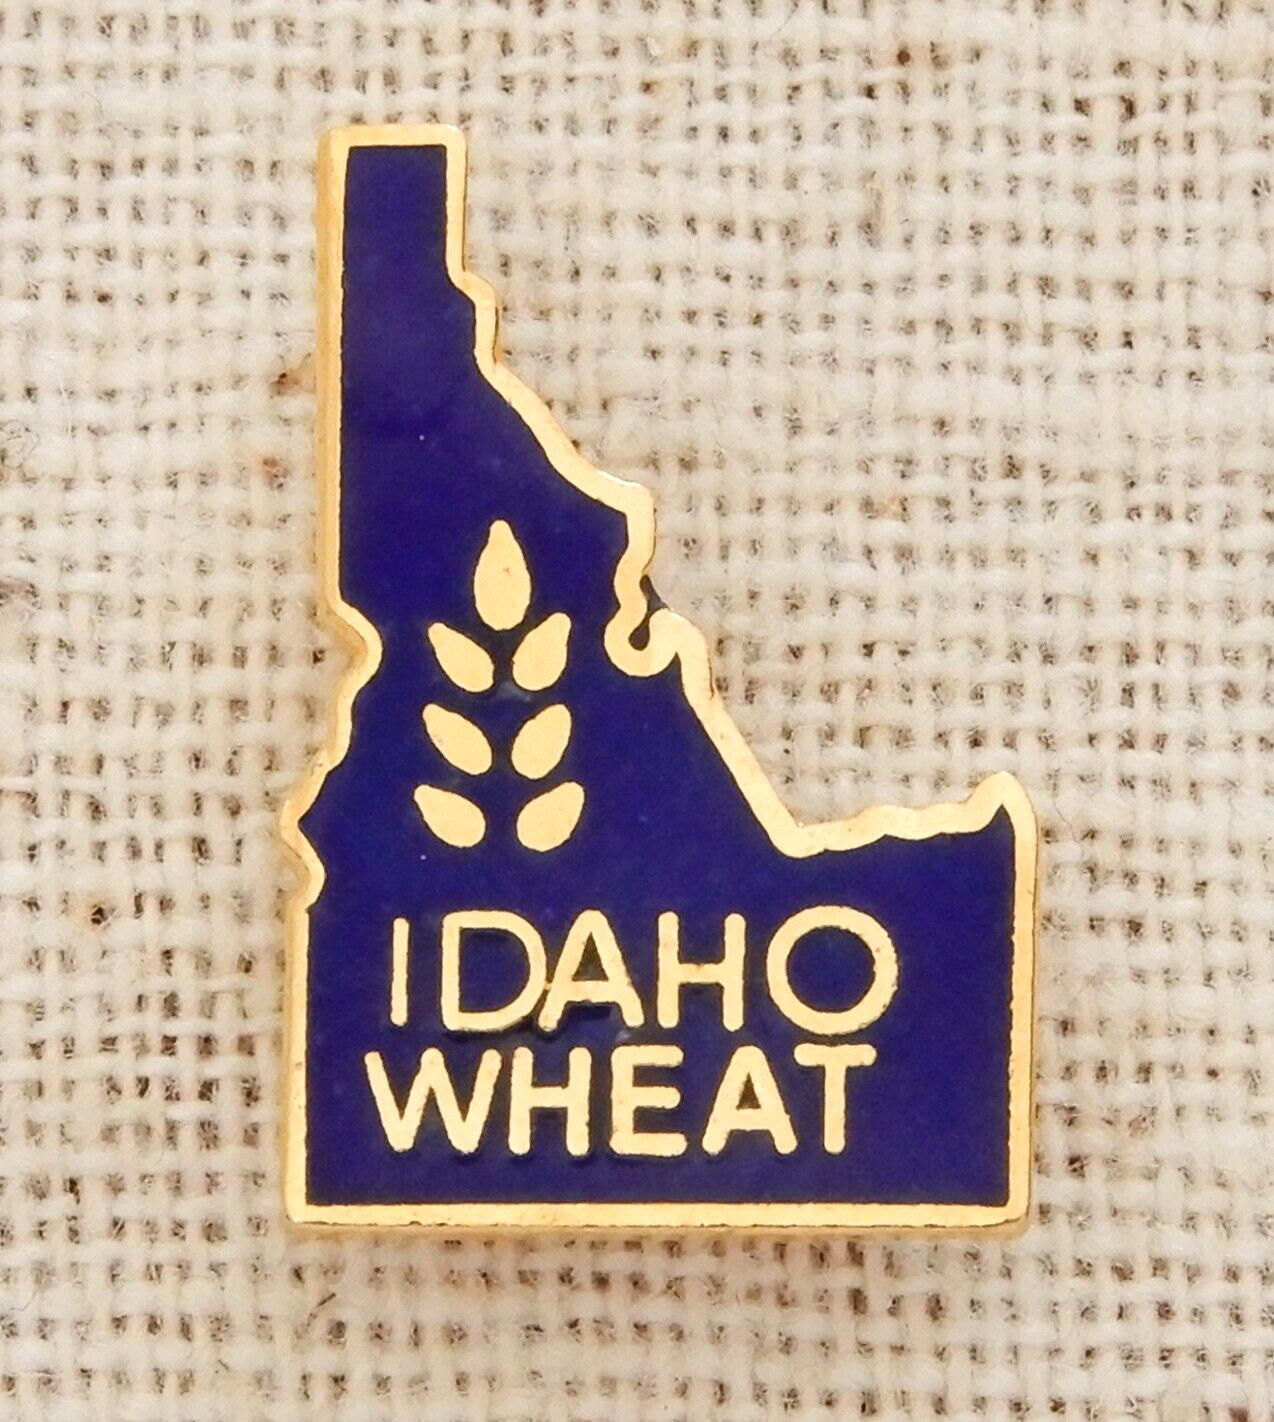 Idaho Wheat Lapel Pin Vintage State Blue Enamel Gold Tone Travel Souvenir Small